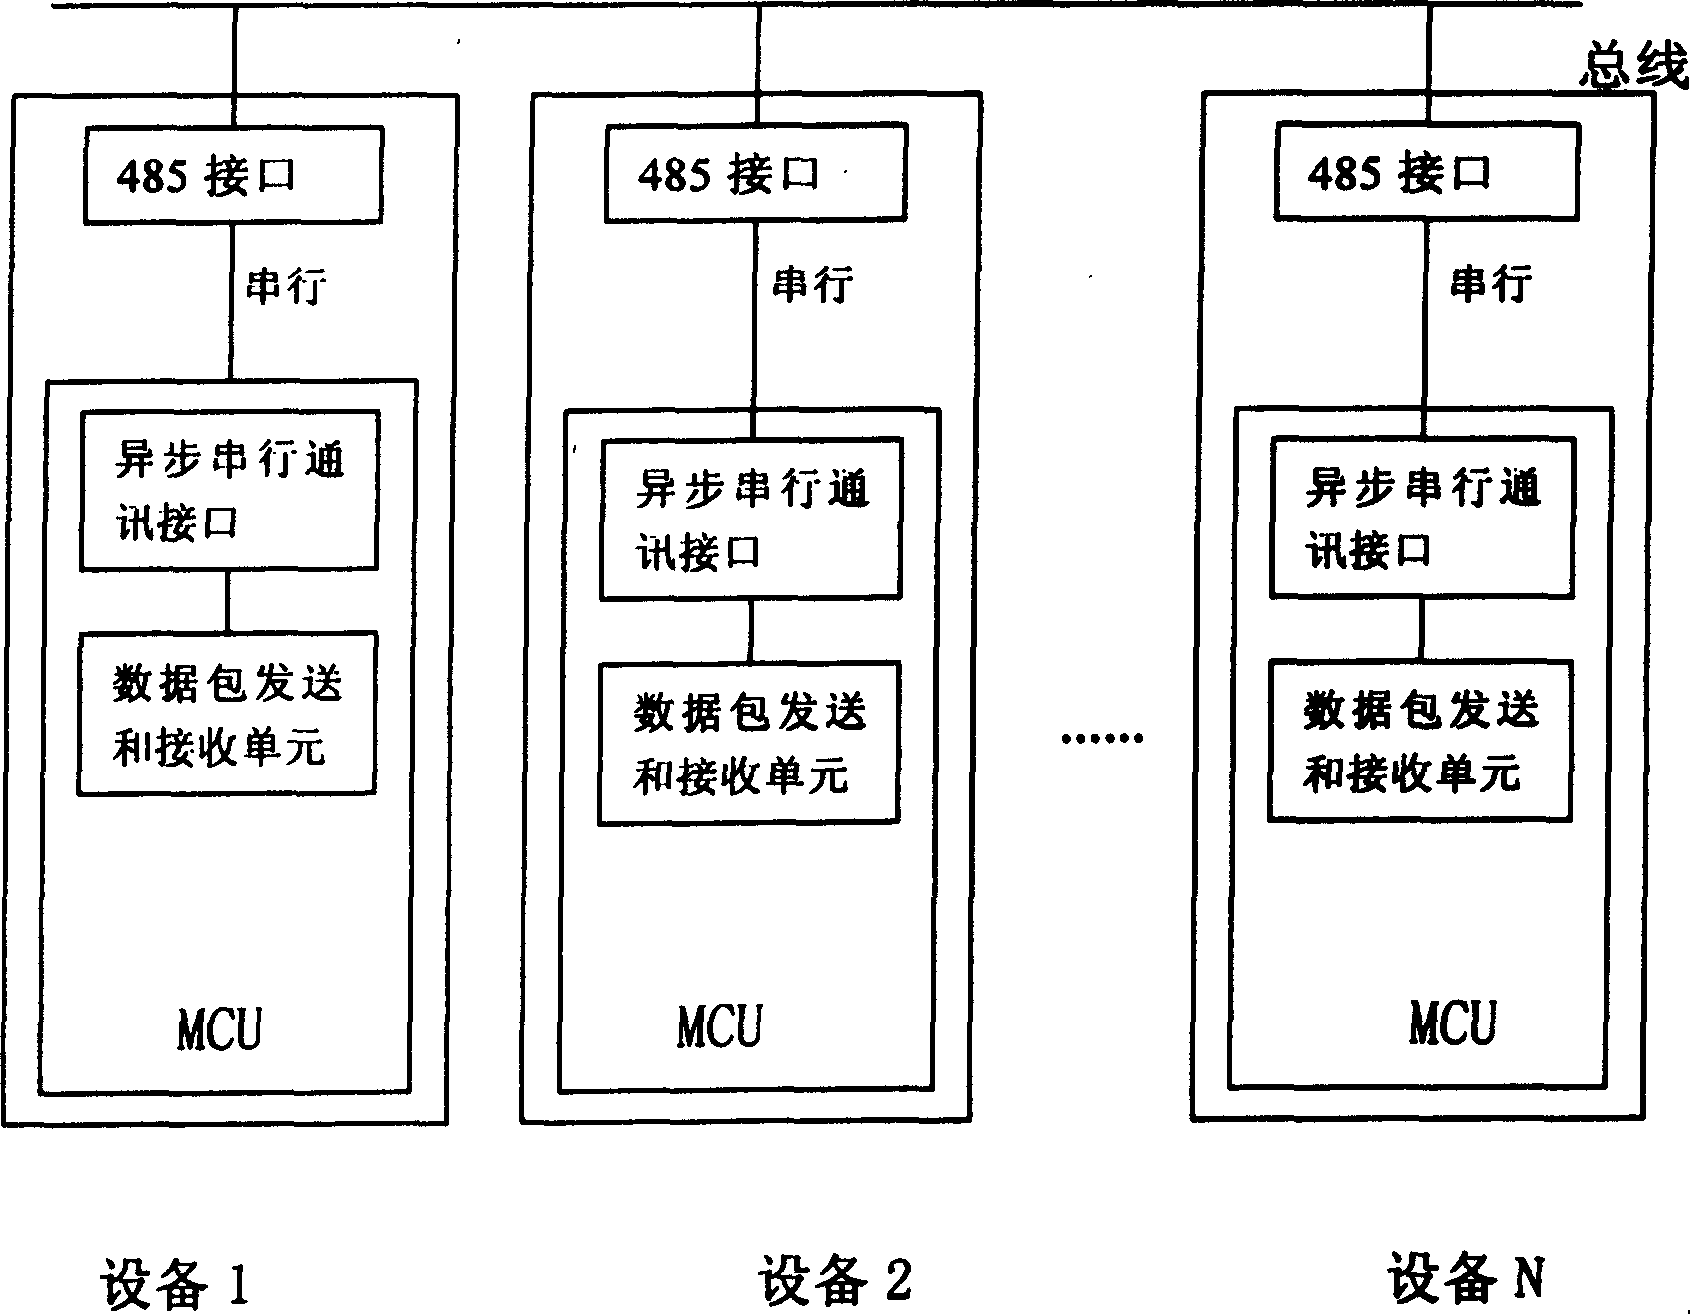 Multi-host communication system